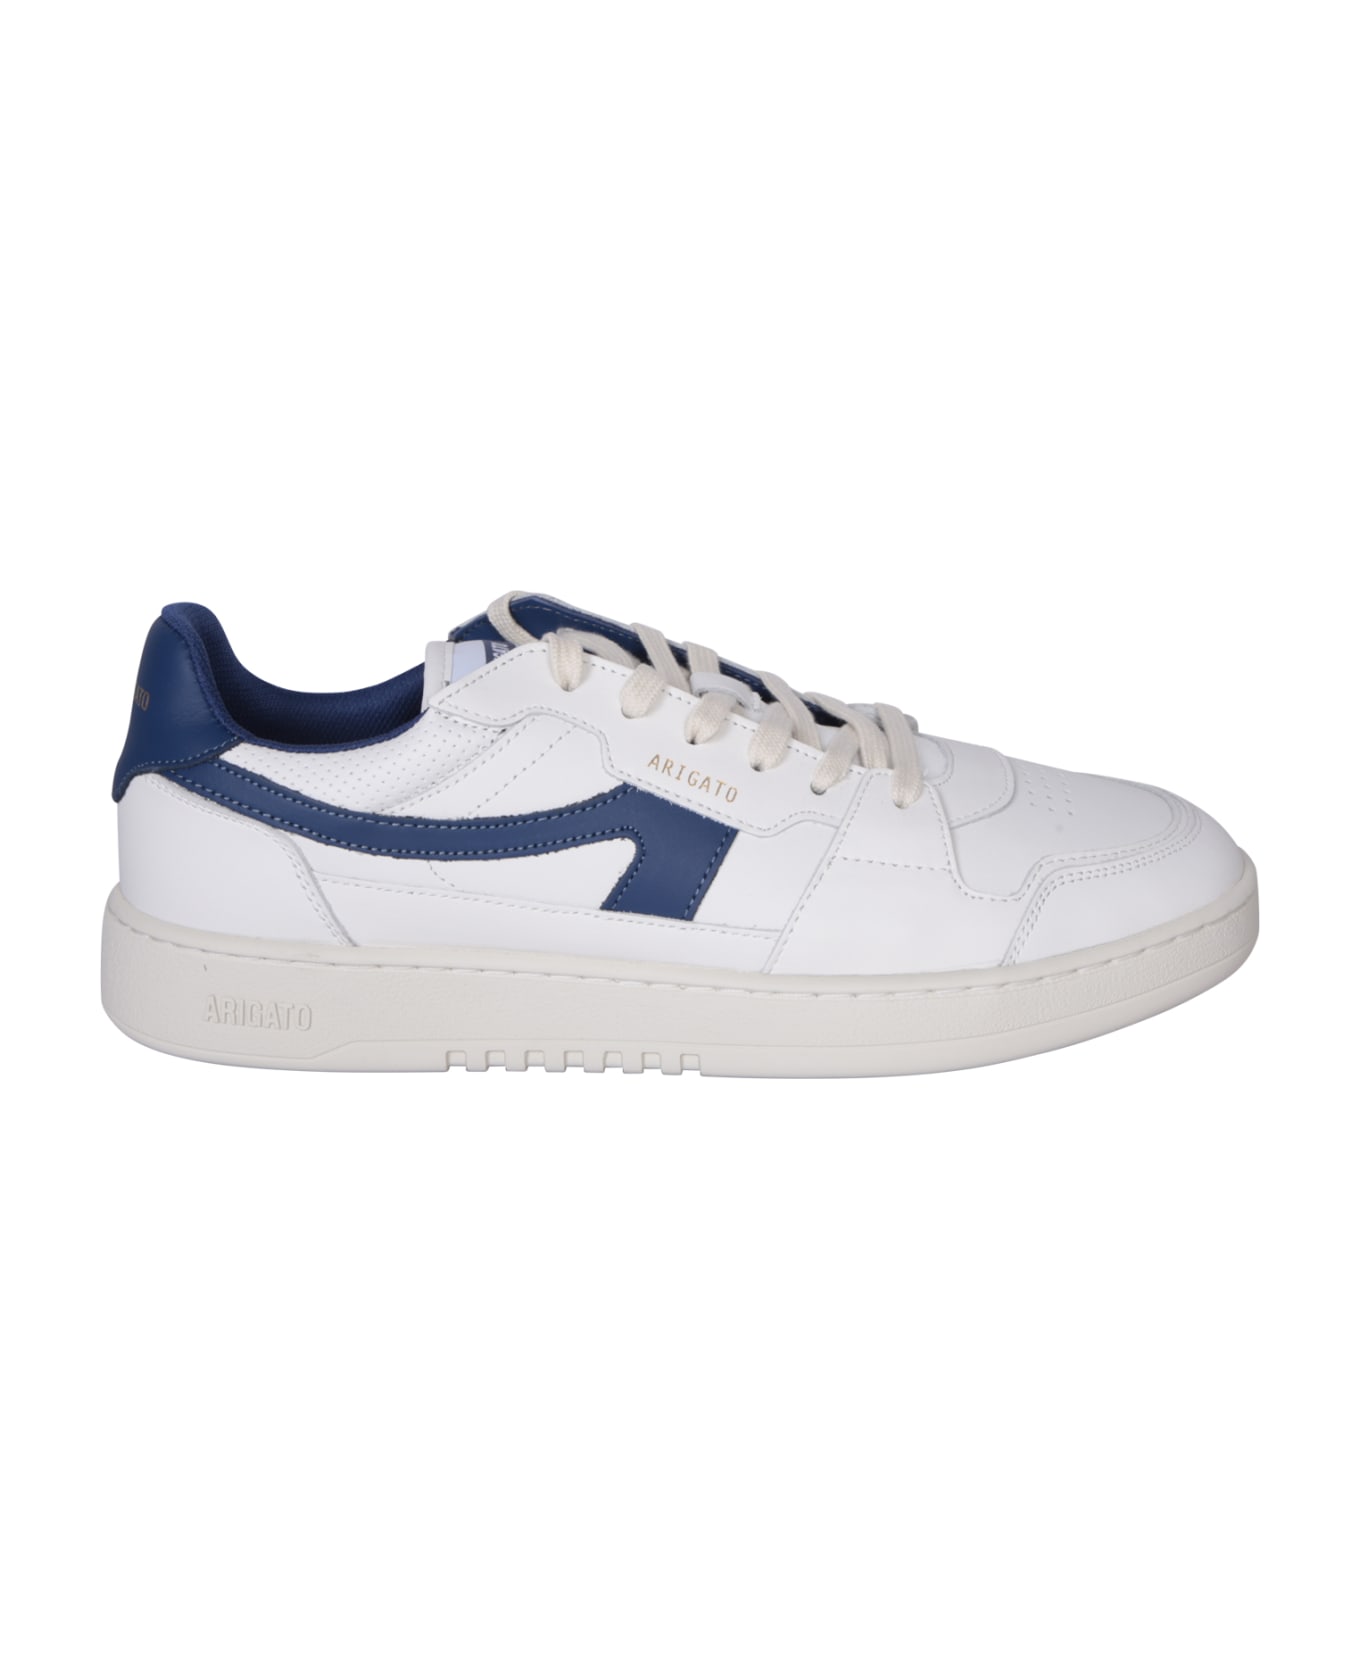 Axel Arigato Dice Stripe White/ Blue Sneakers - White